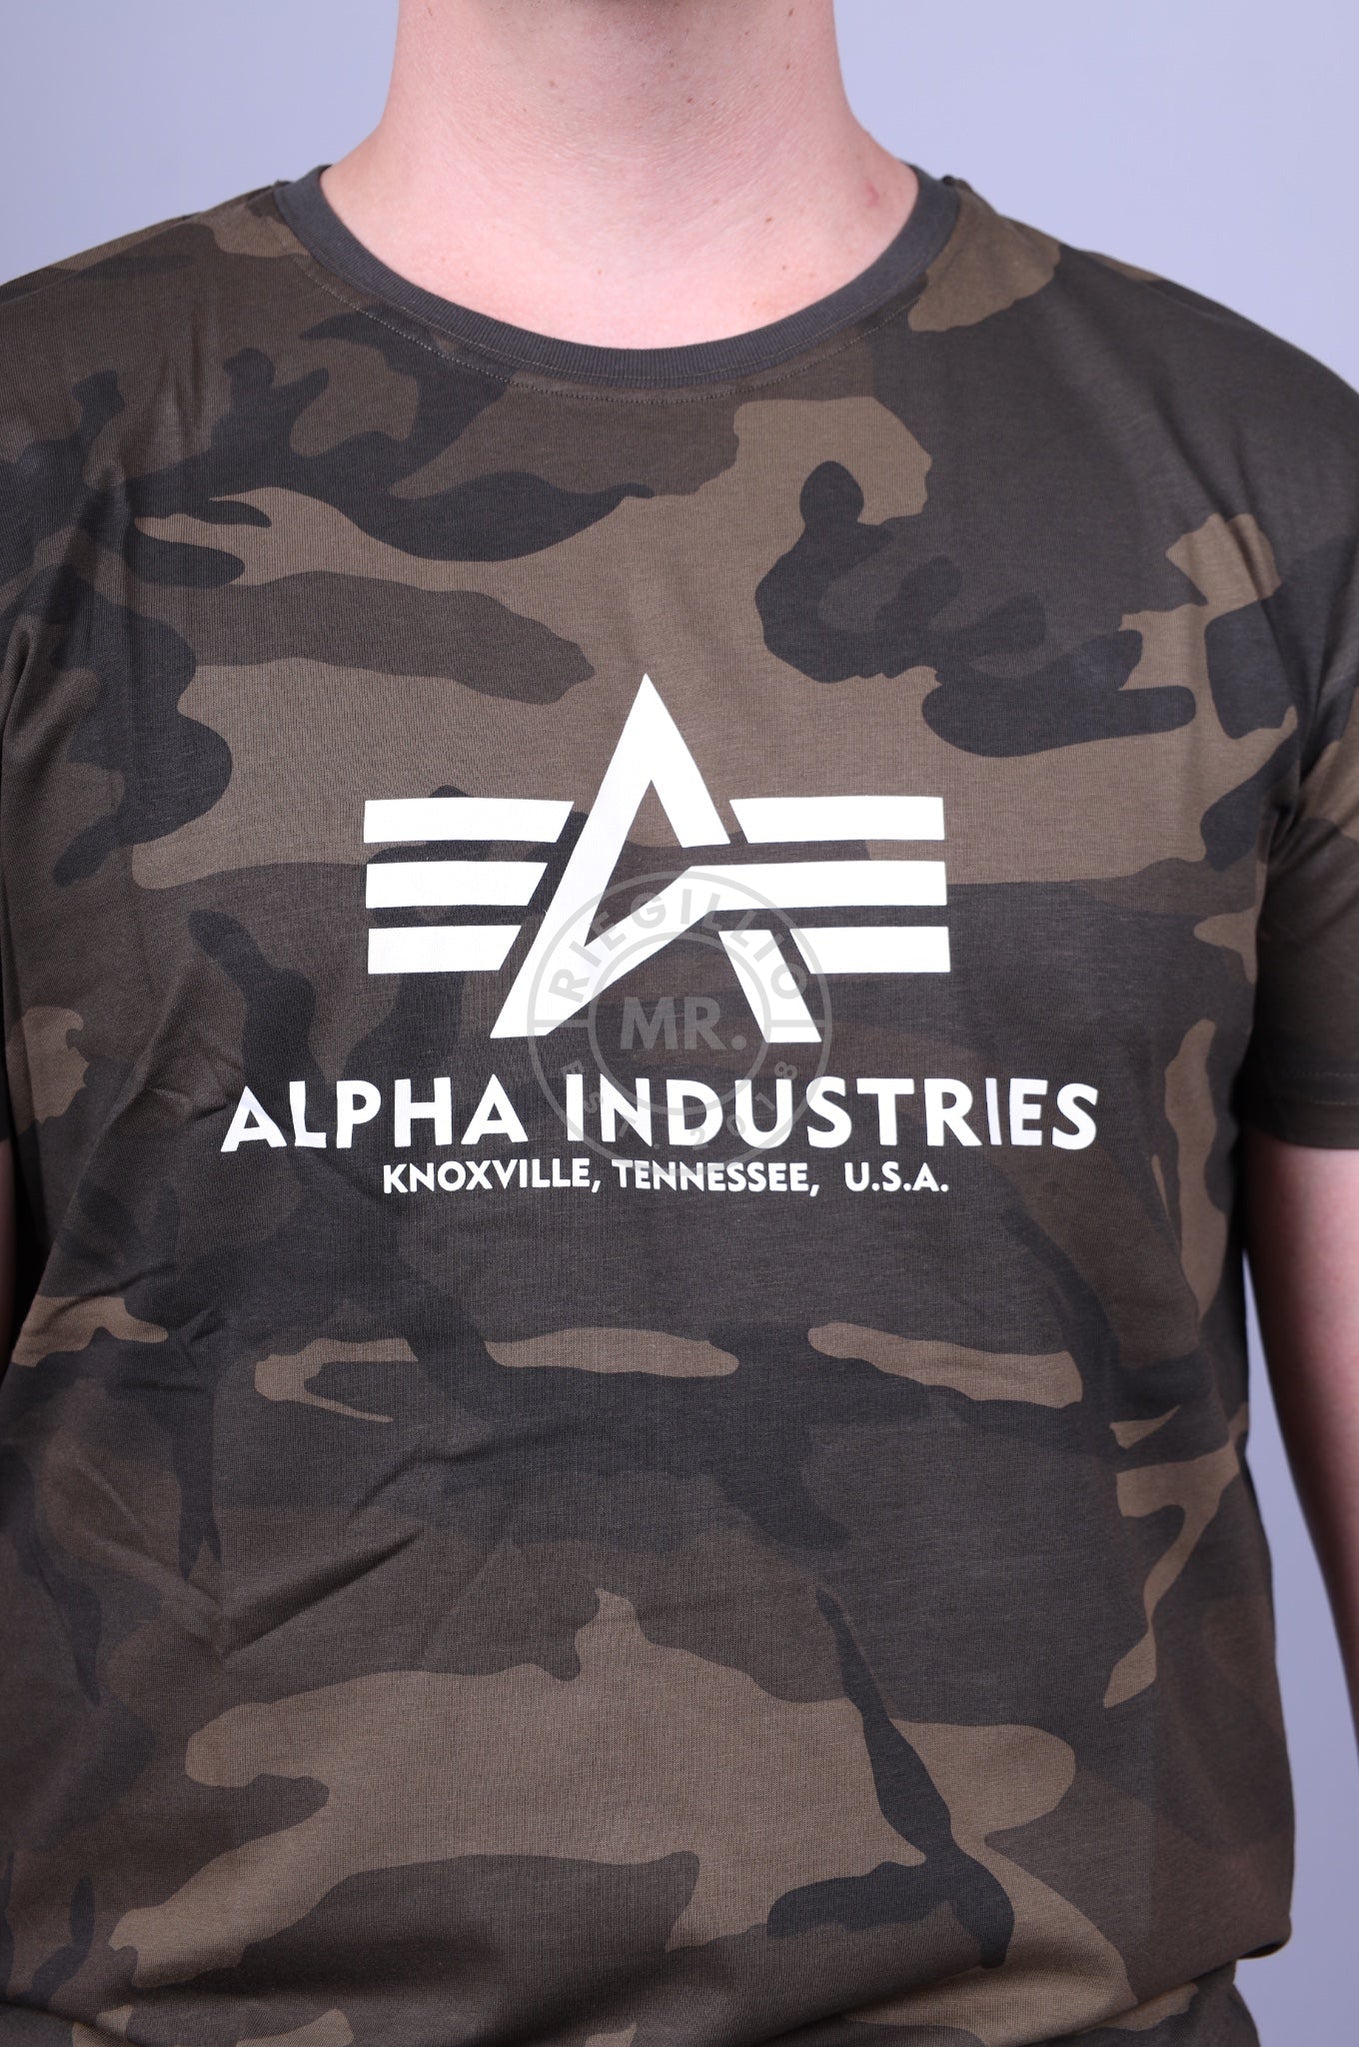 Alpha Industries Basic T-Shirt MR. at Camo Black Riegillio